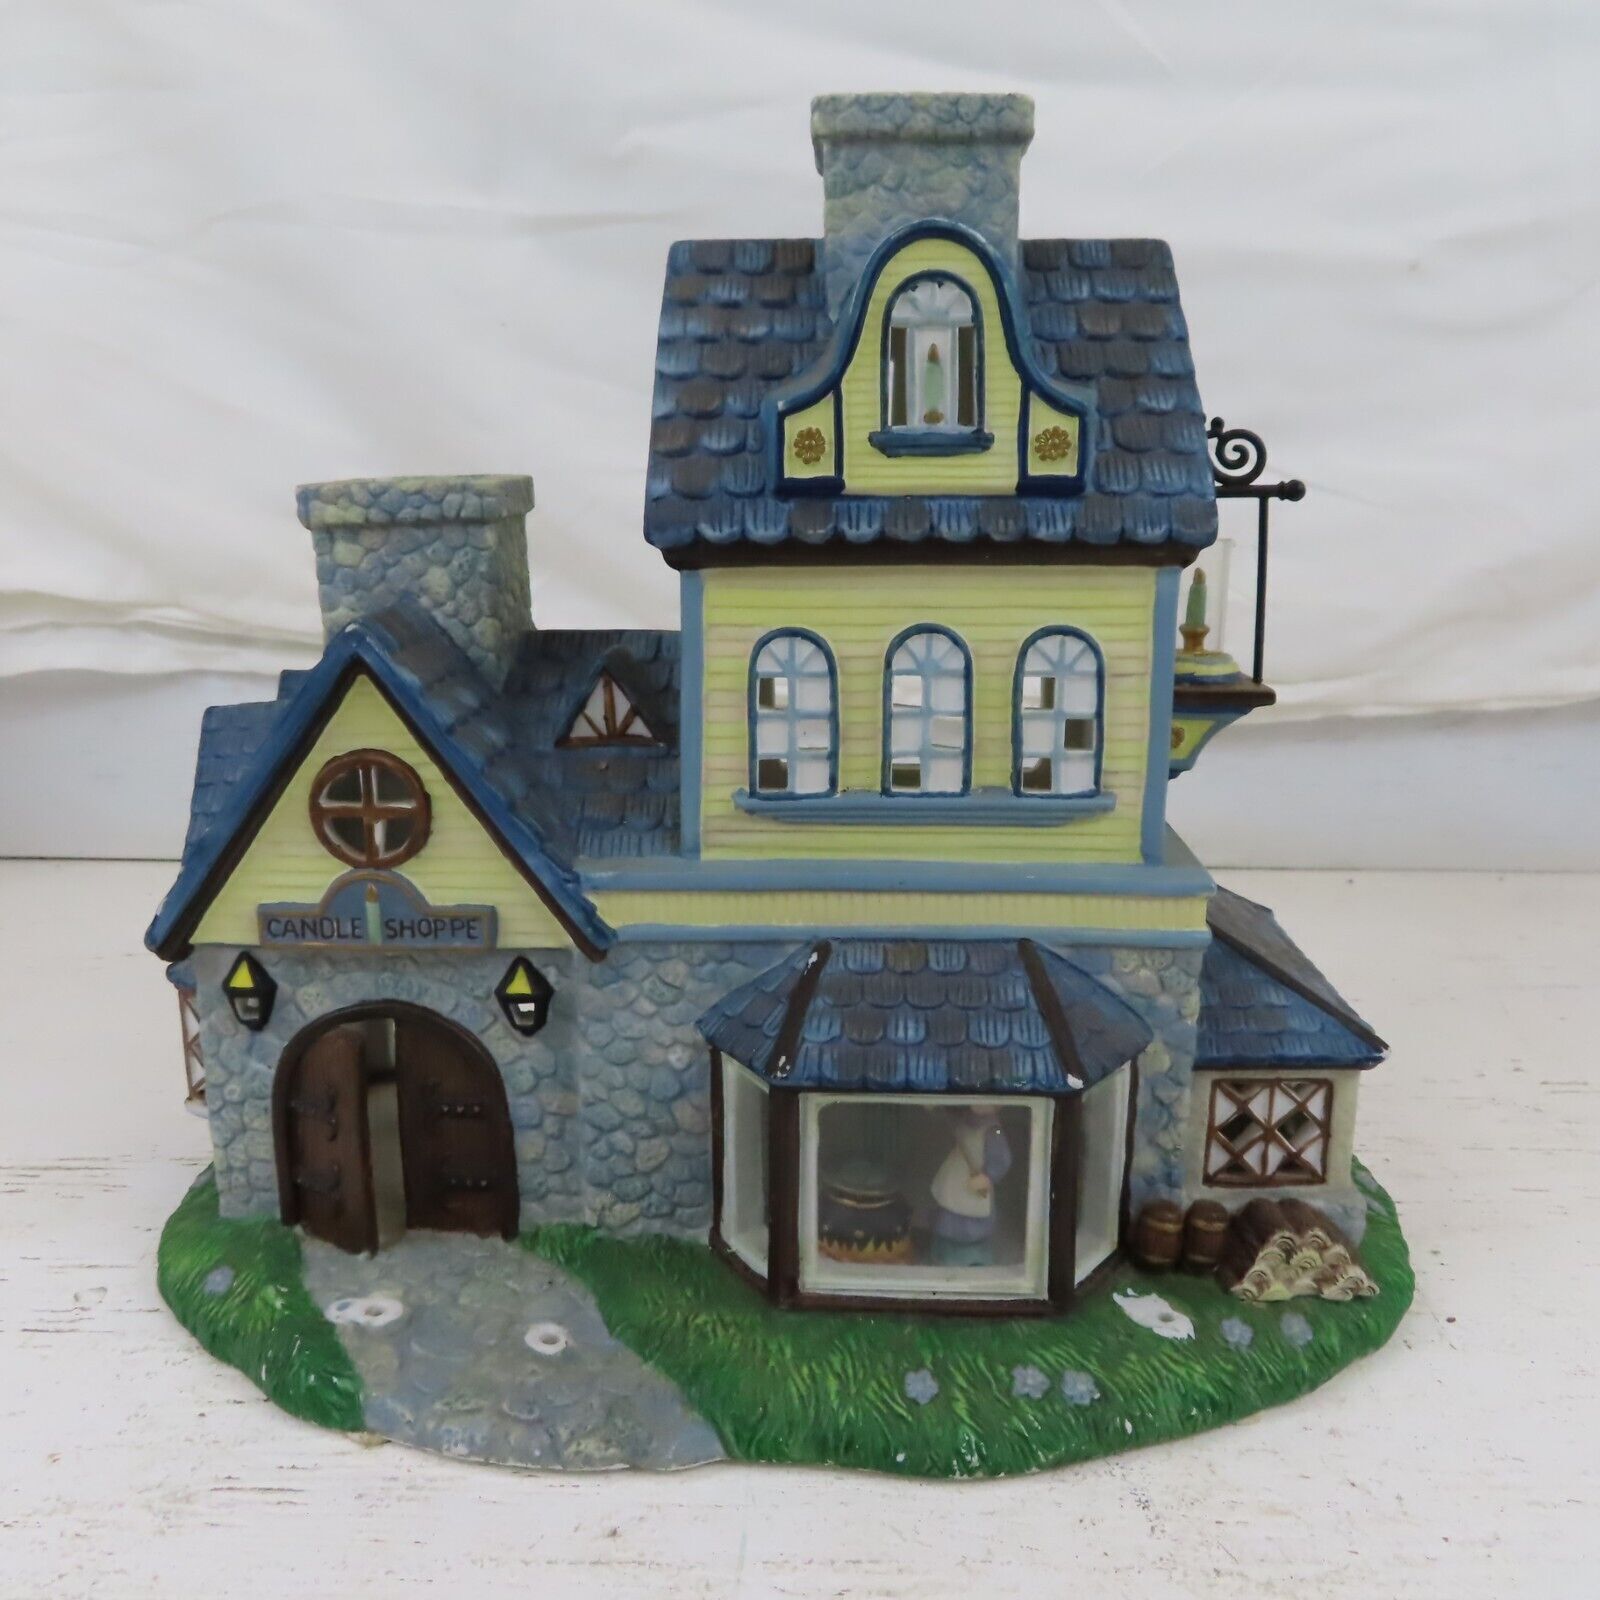 PartyLite Tea Light House Old World Village Candle Shoppe #1 Figure Inside READ